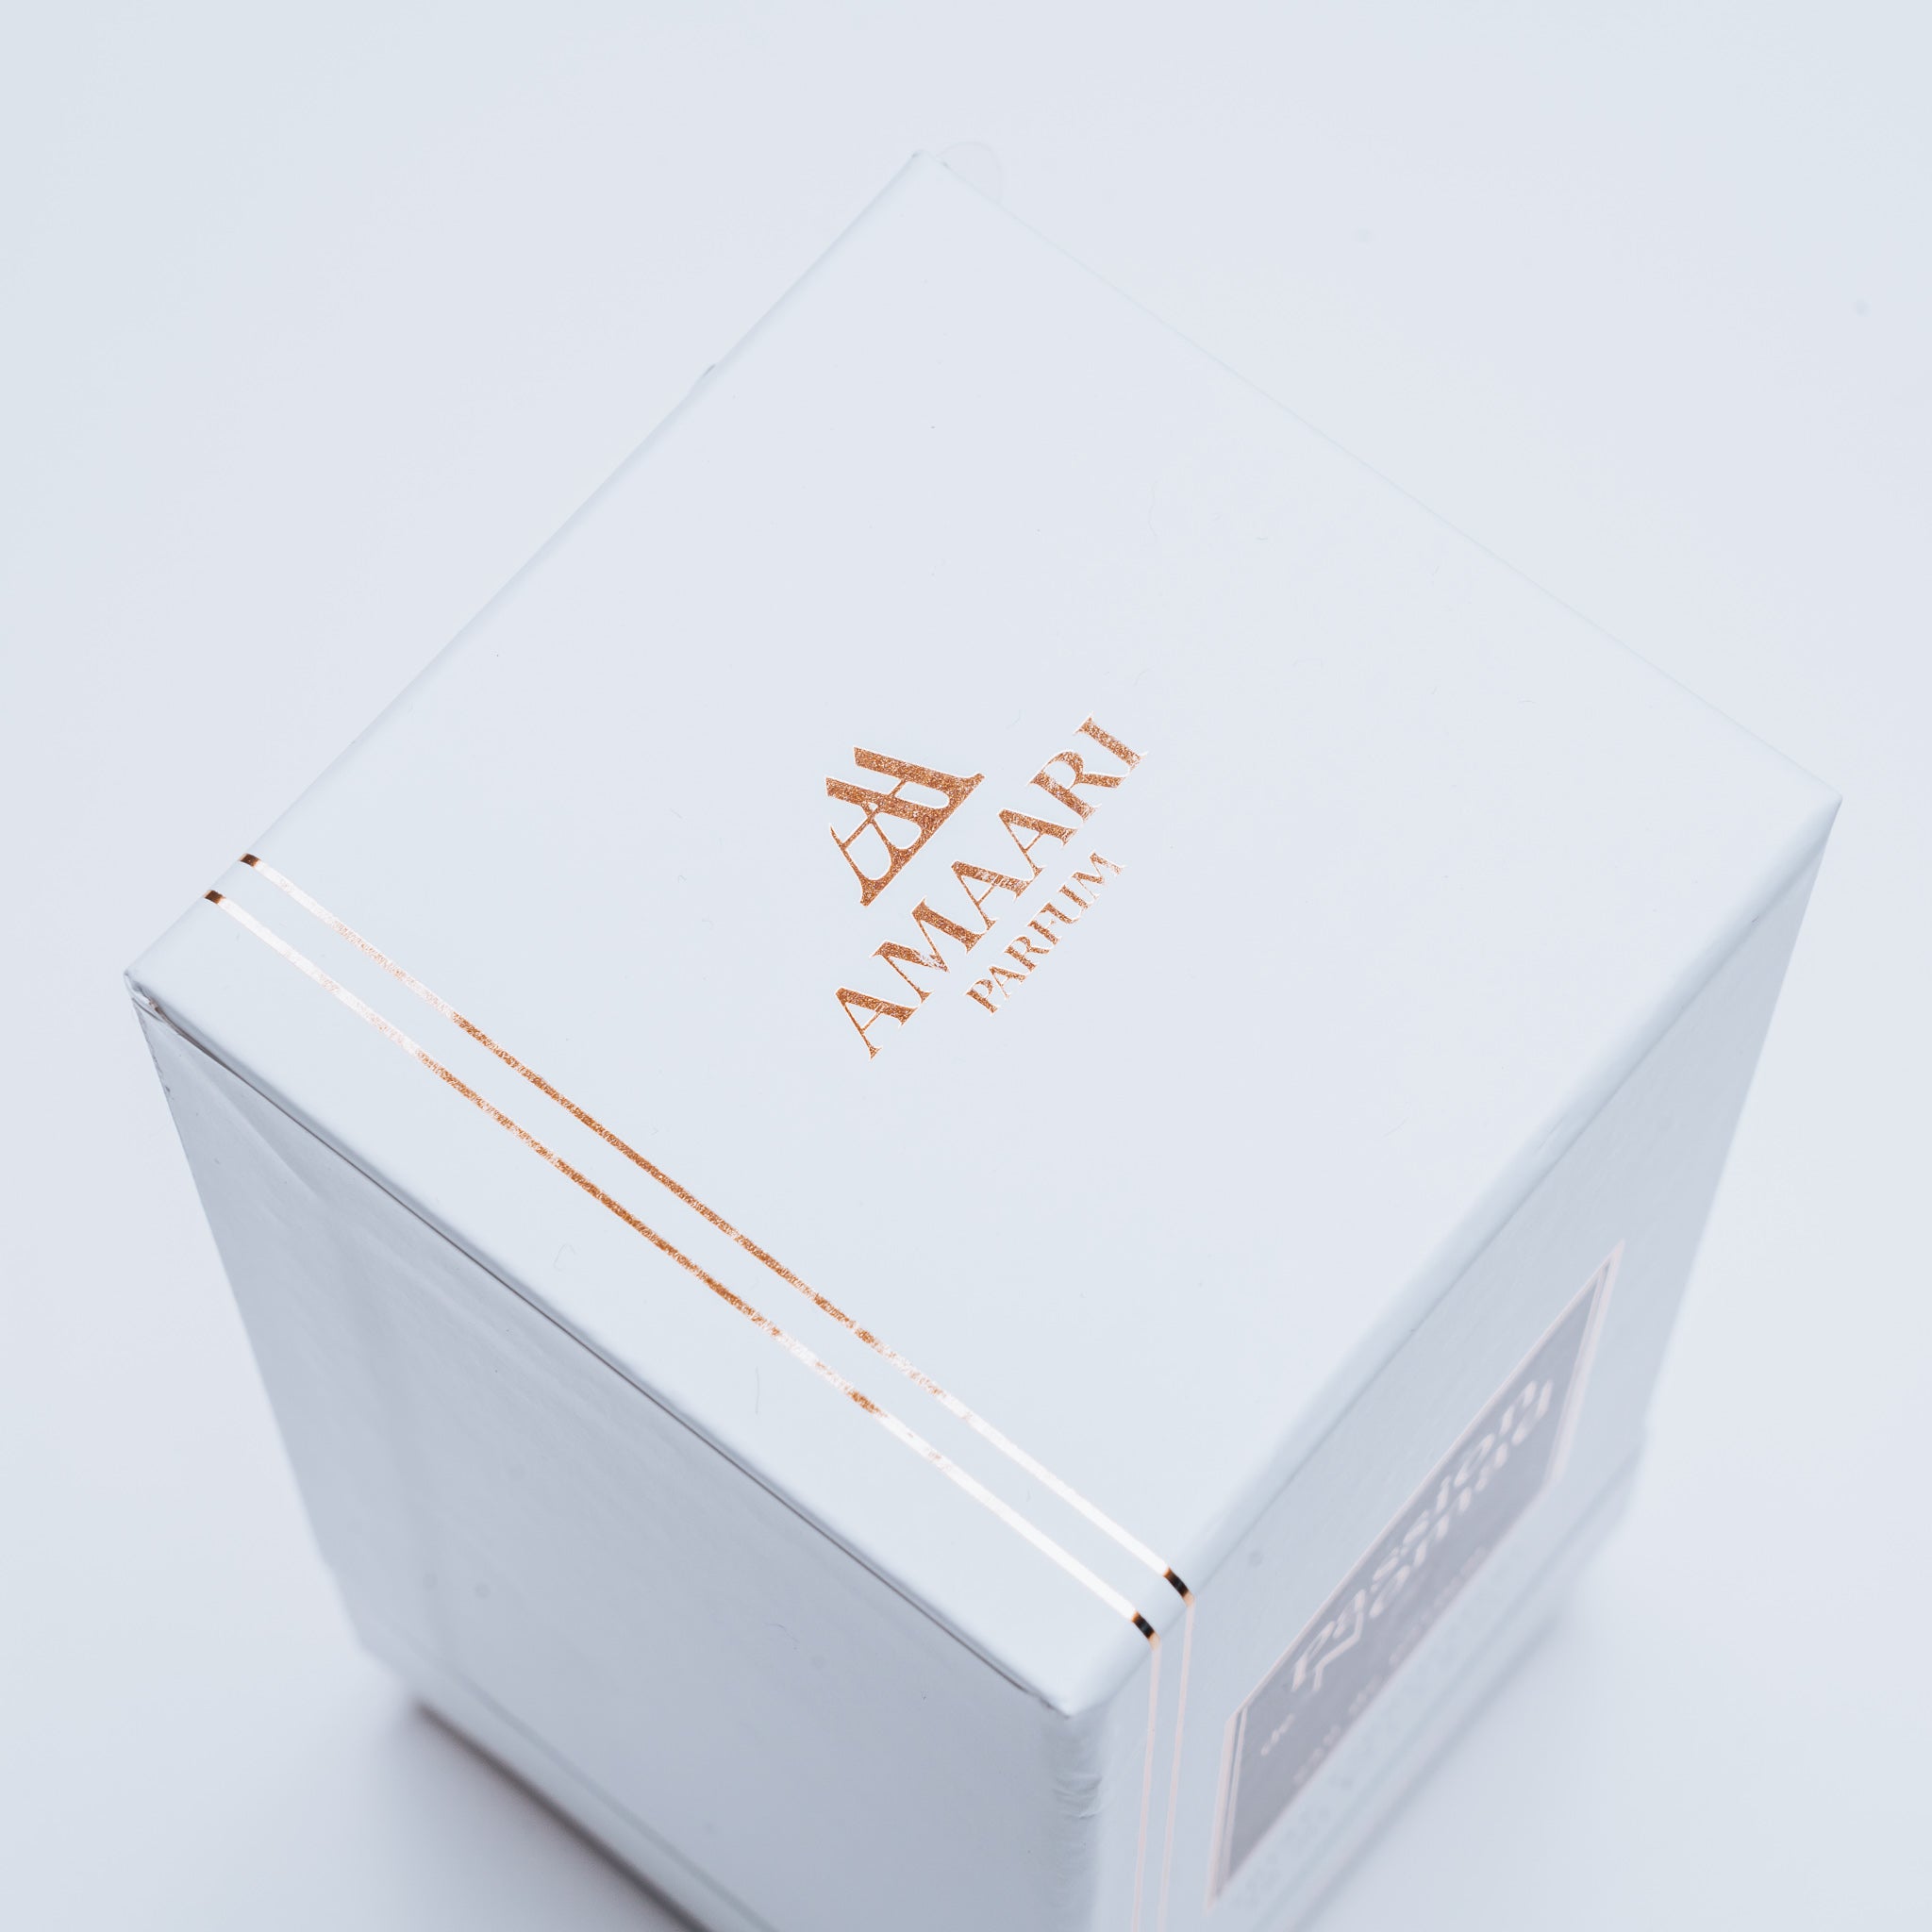 Passion de Nomad - Alternative to Ombre Nomad (Louis Vuitton) - 50ml –  Amaari Parfum